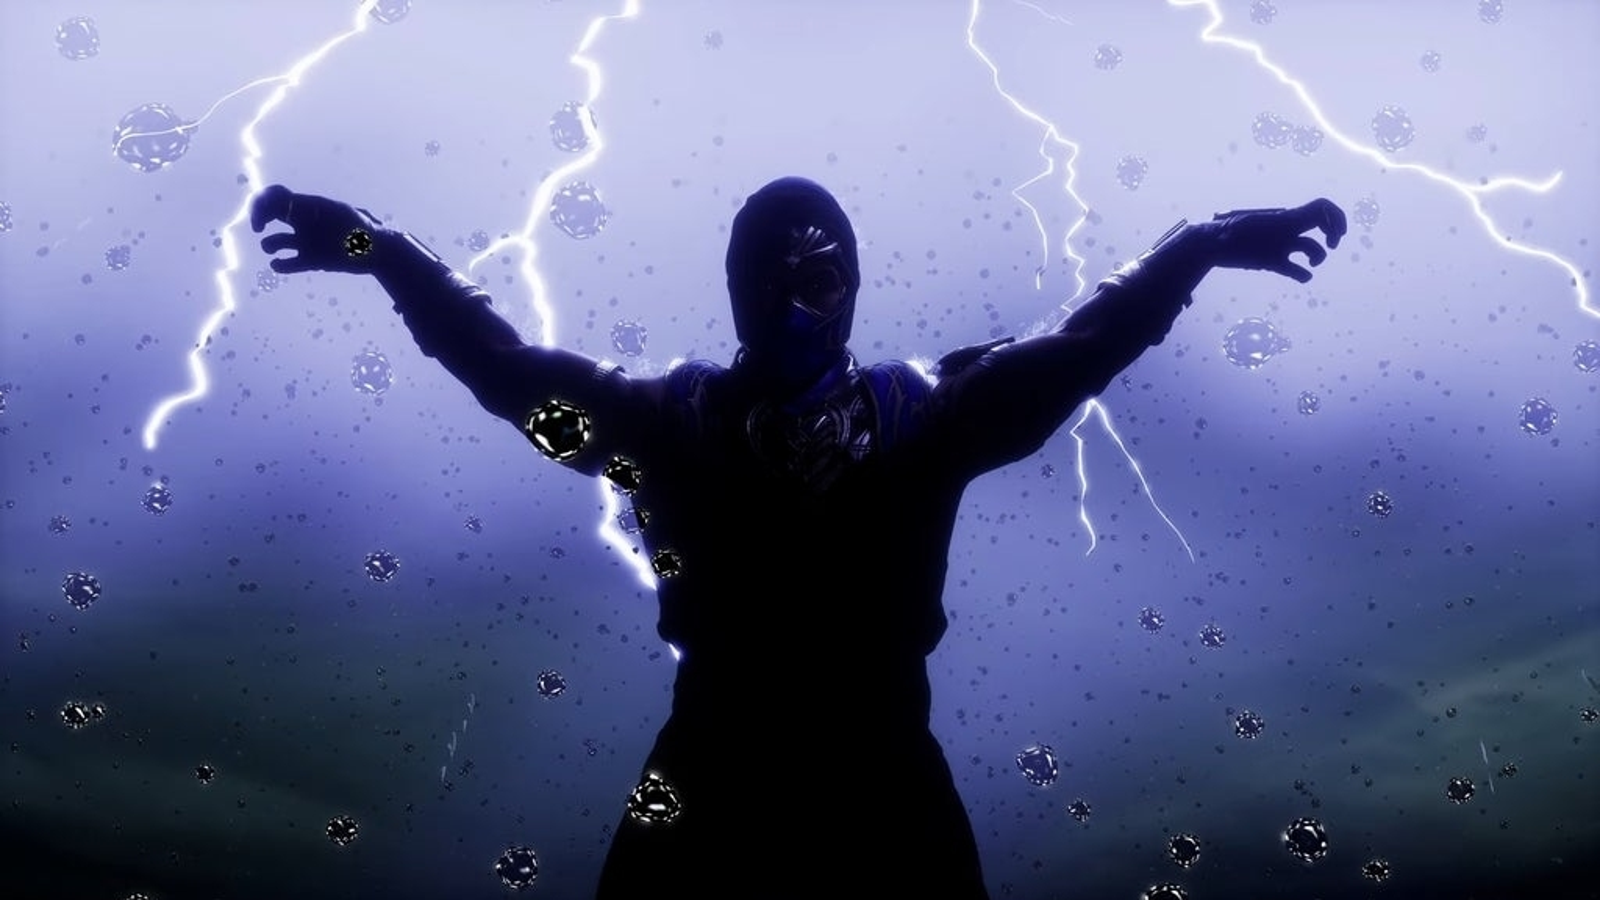 Mortal Kombat 11 Leak May Reveal Rambo as New DLC Character